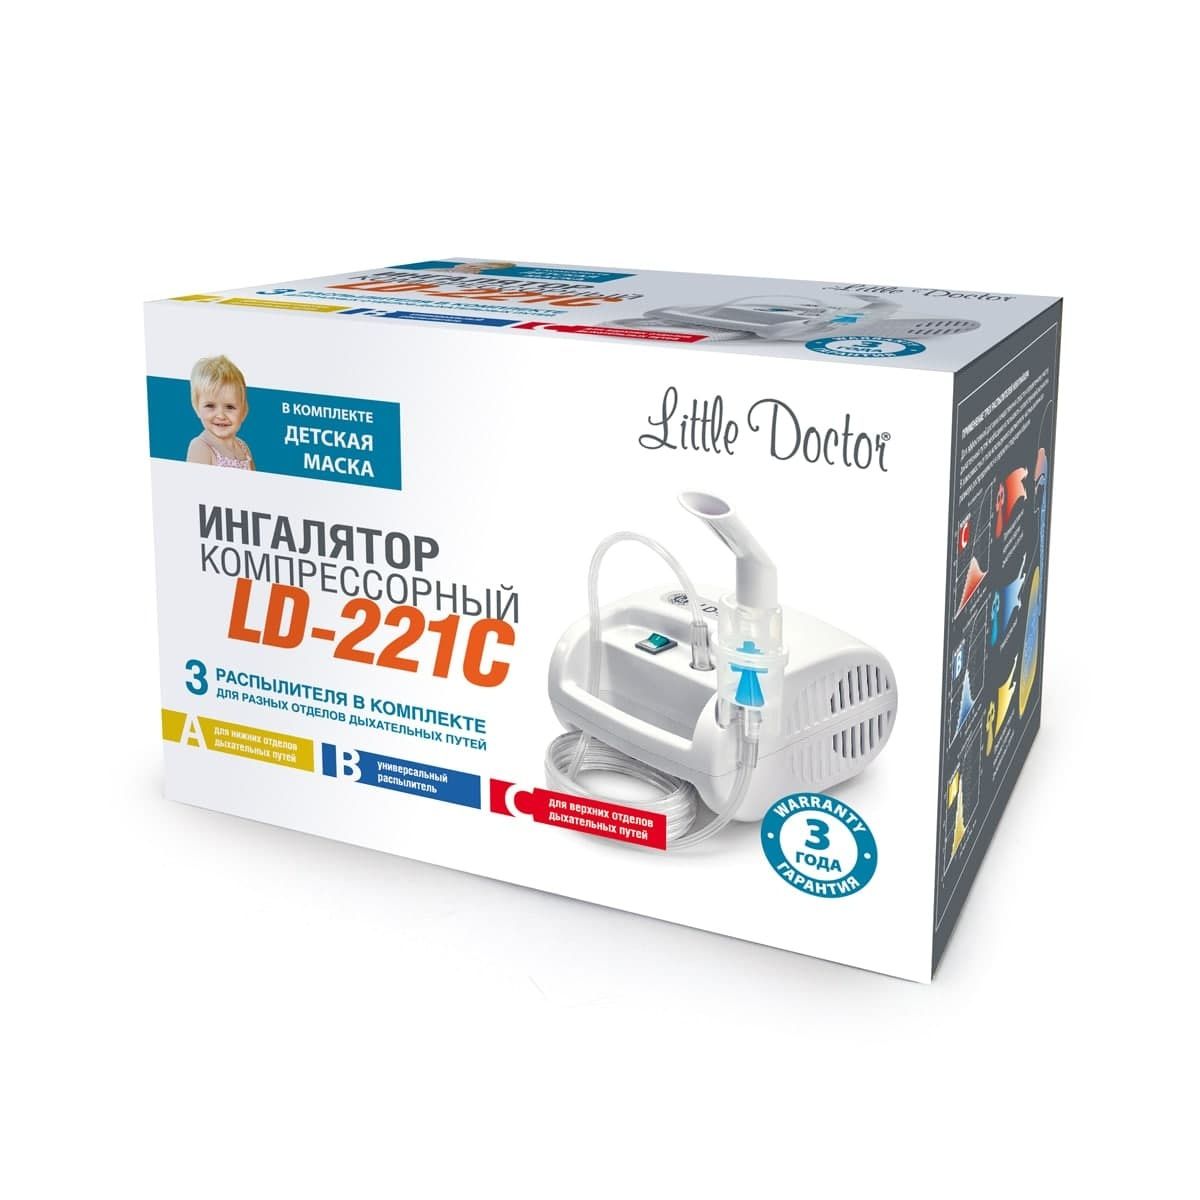 Little doctor ld 215,220,221 kompressorni Литтл Доктор